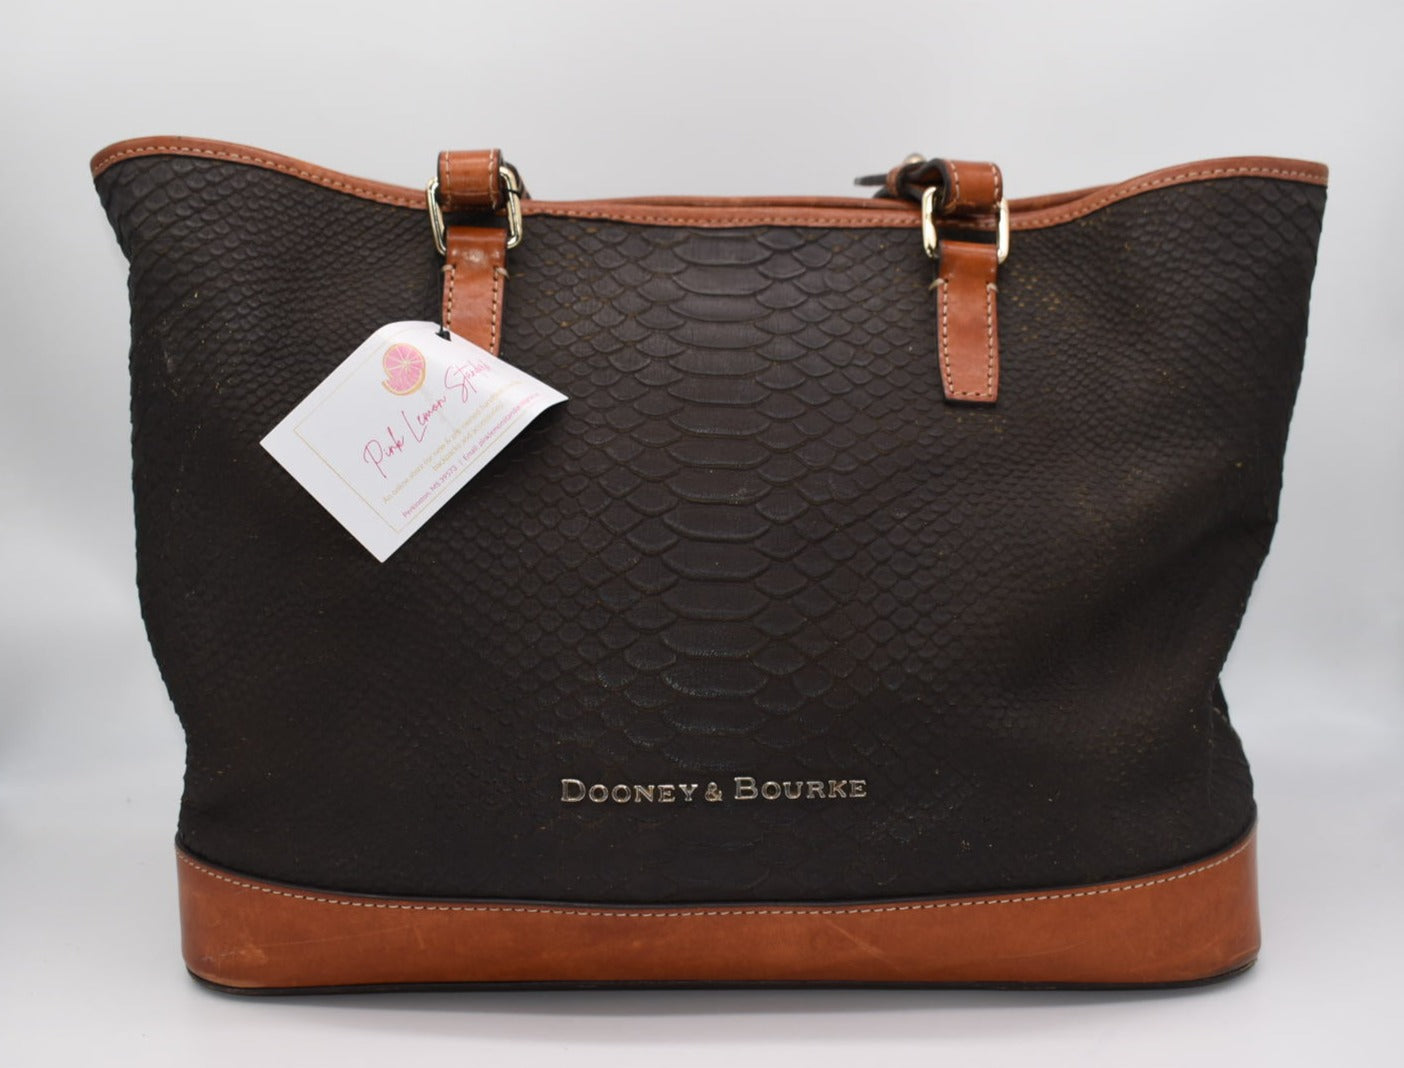 Dooney & Bourke Claremont Python Lina Tote Bag